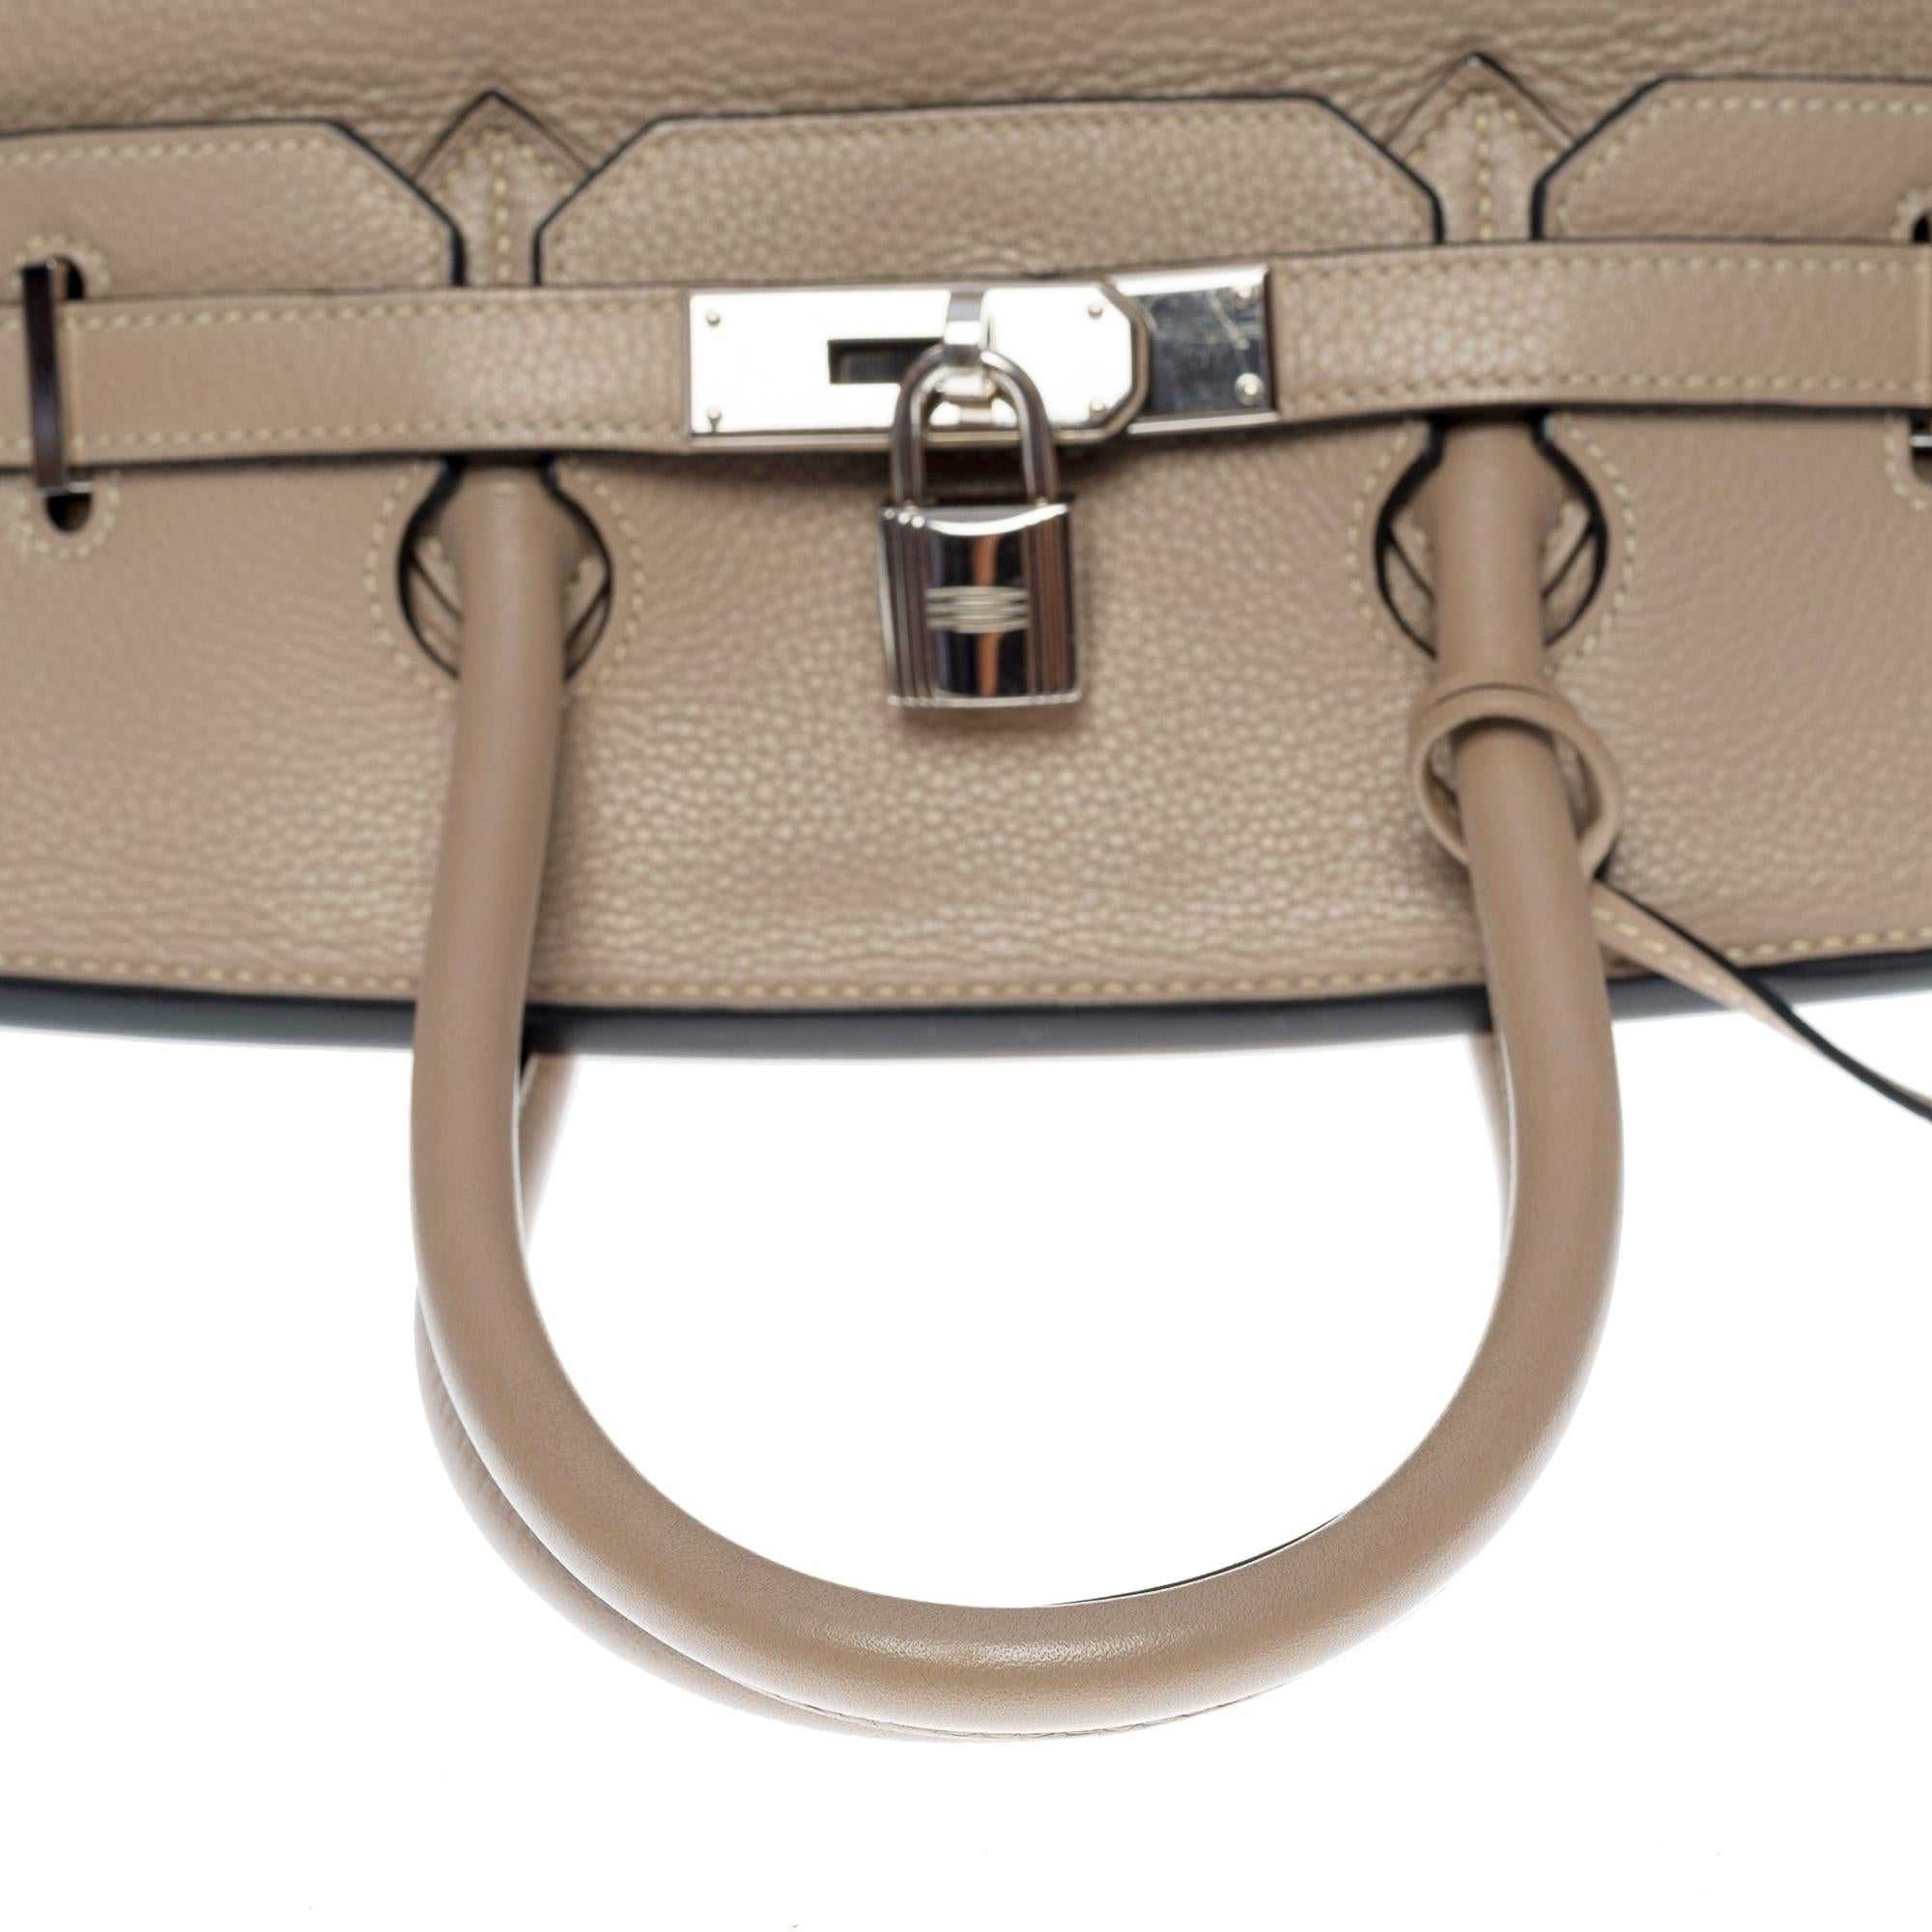 Superb Hermes Birkin 35 cm handbag in dove gray Togo leather, SHW 2